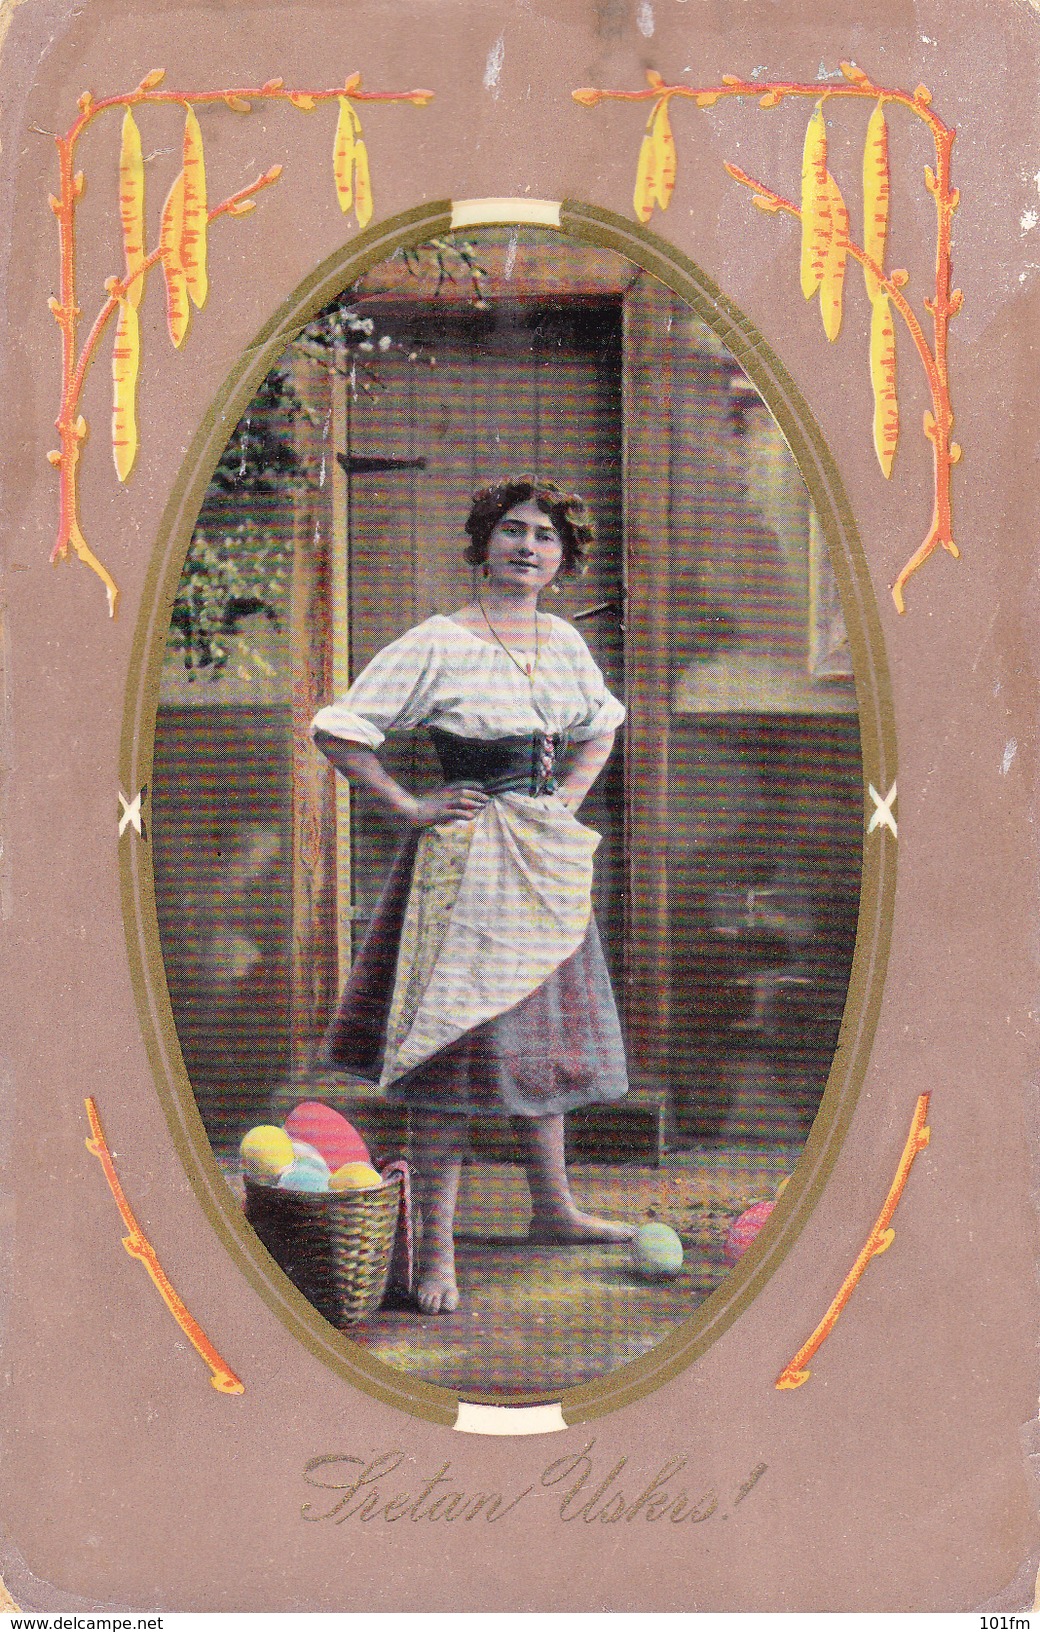 Sretan Uskrs, Easter Greetings - Frohliche Ostern,1913 - Ostern